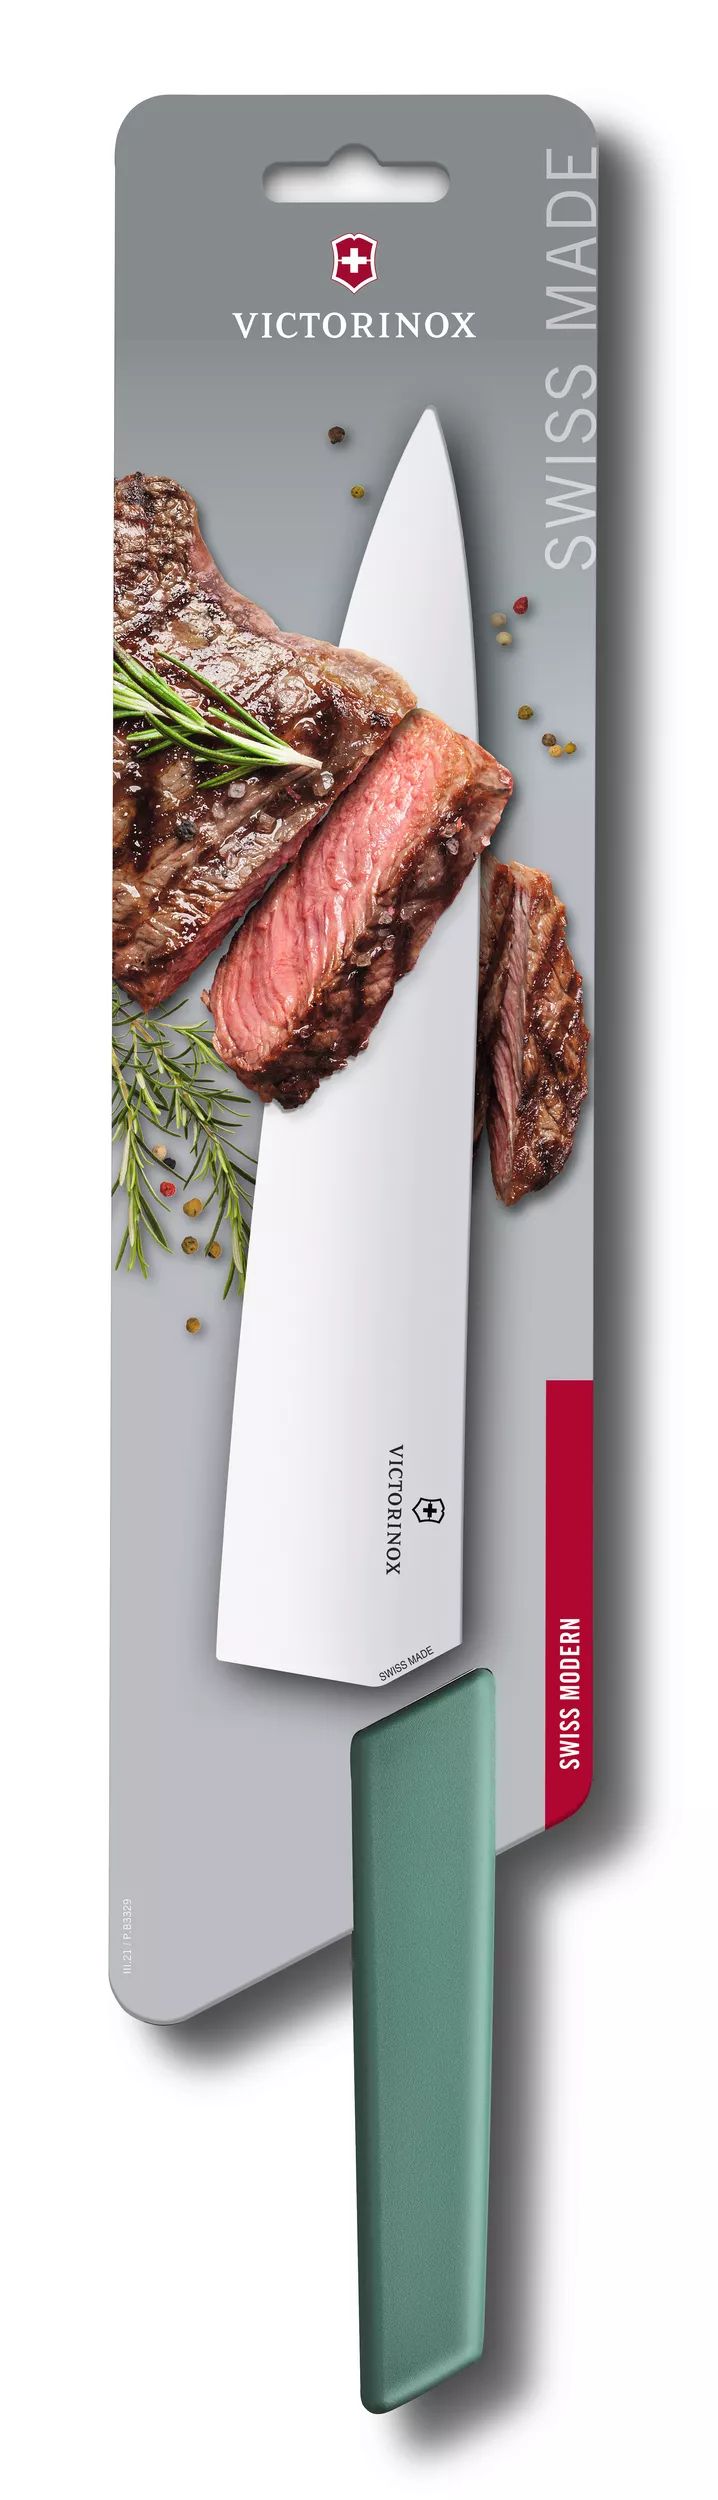 Couteau de chef Swiss Modern - 6.9016.2543B